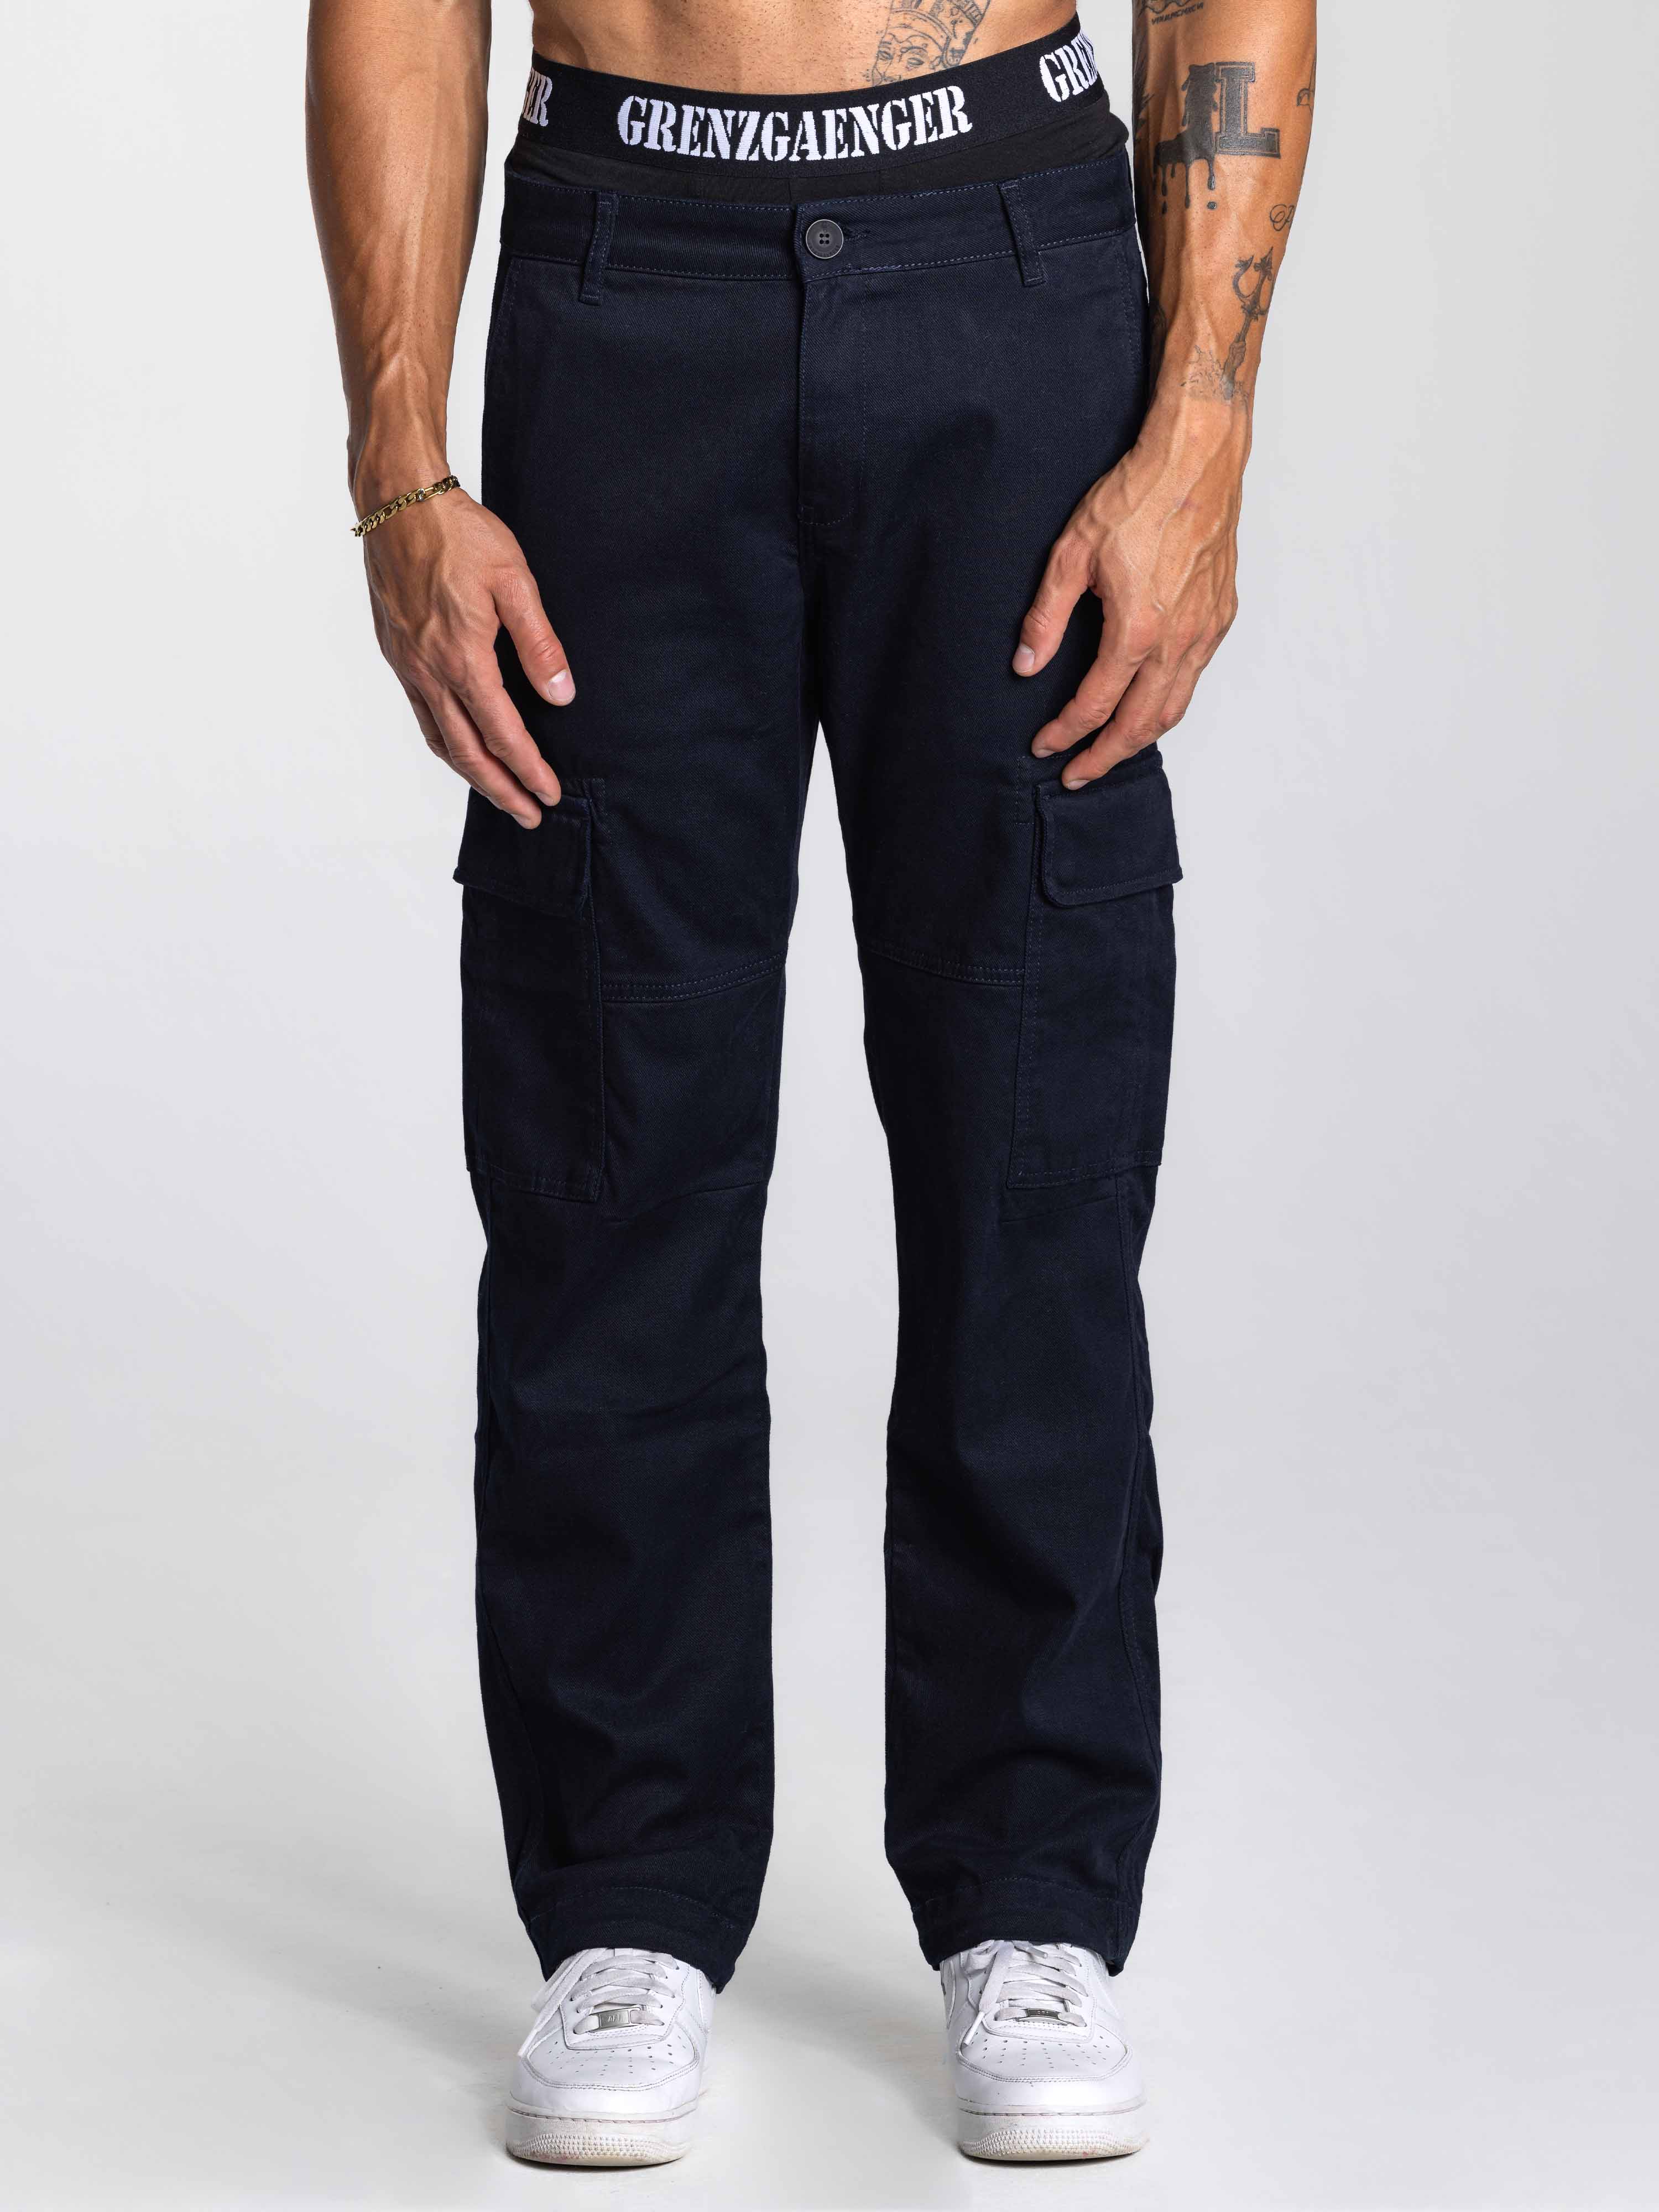 Classic Cargo Pants - navy blue, Pants, Men